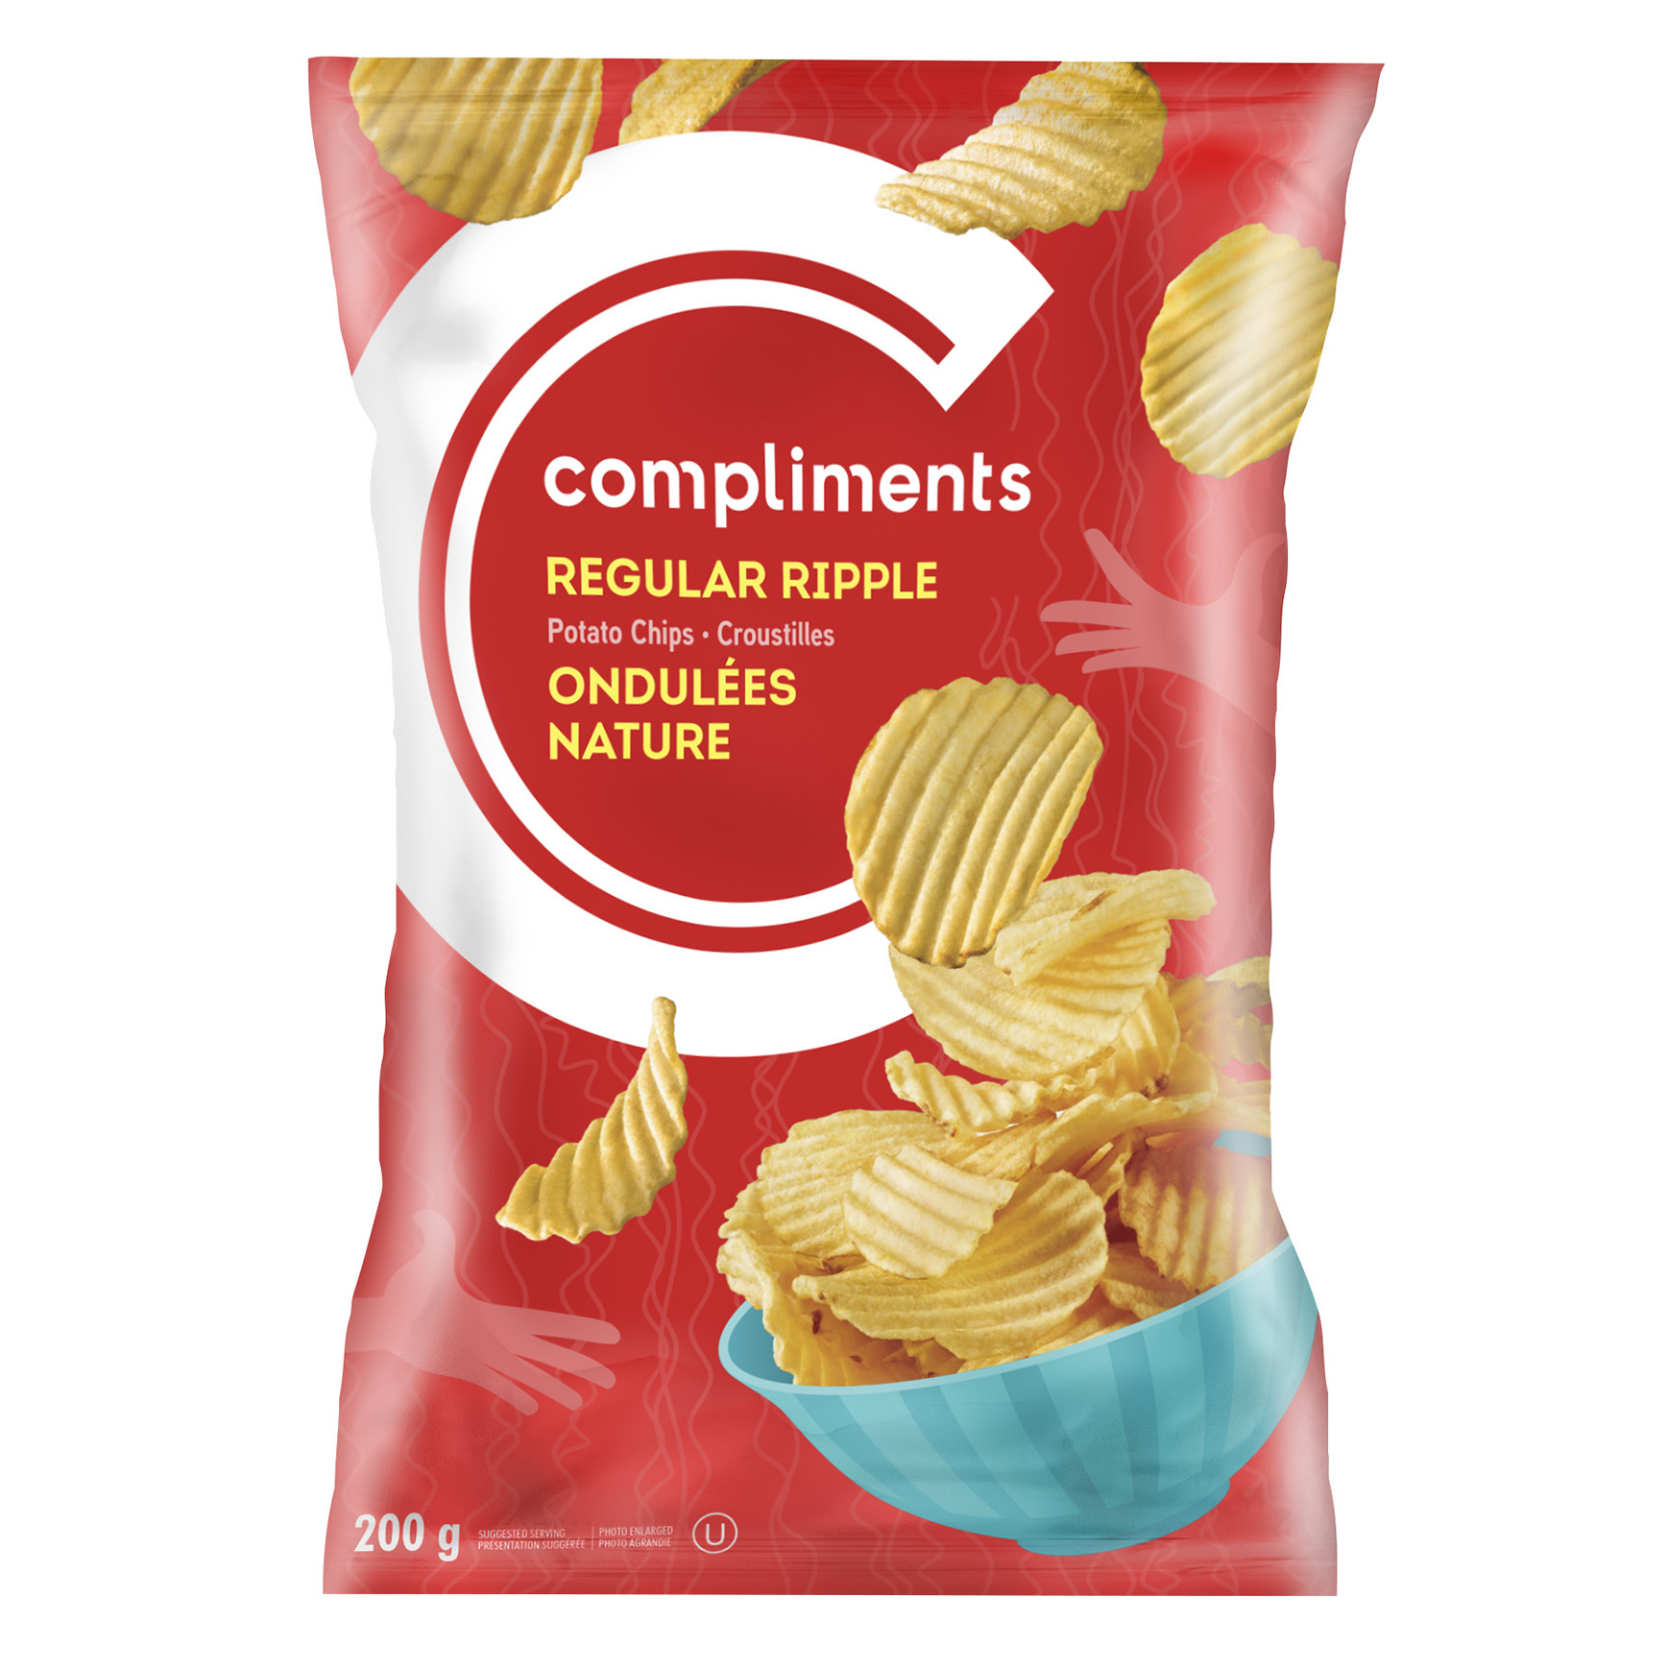 Compliments Regular Ripple Potato Chips 200g